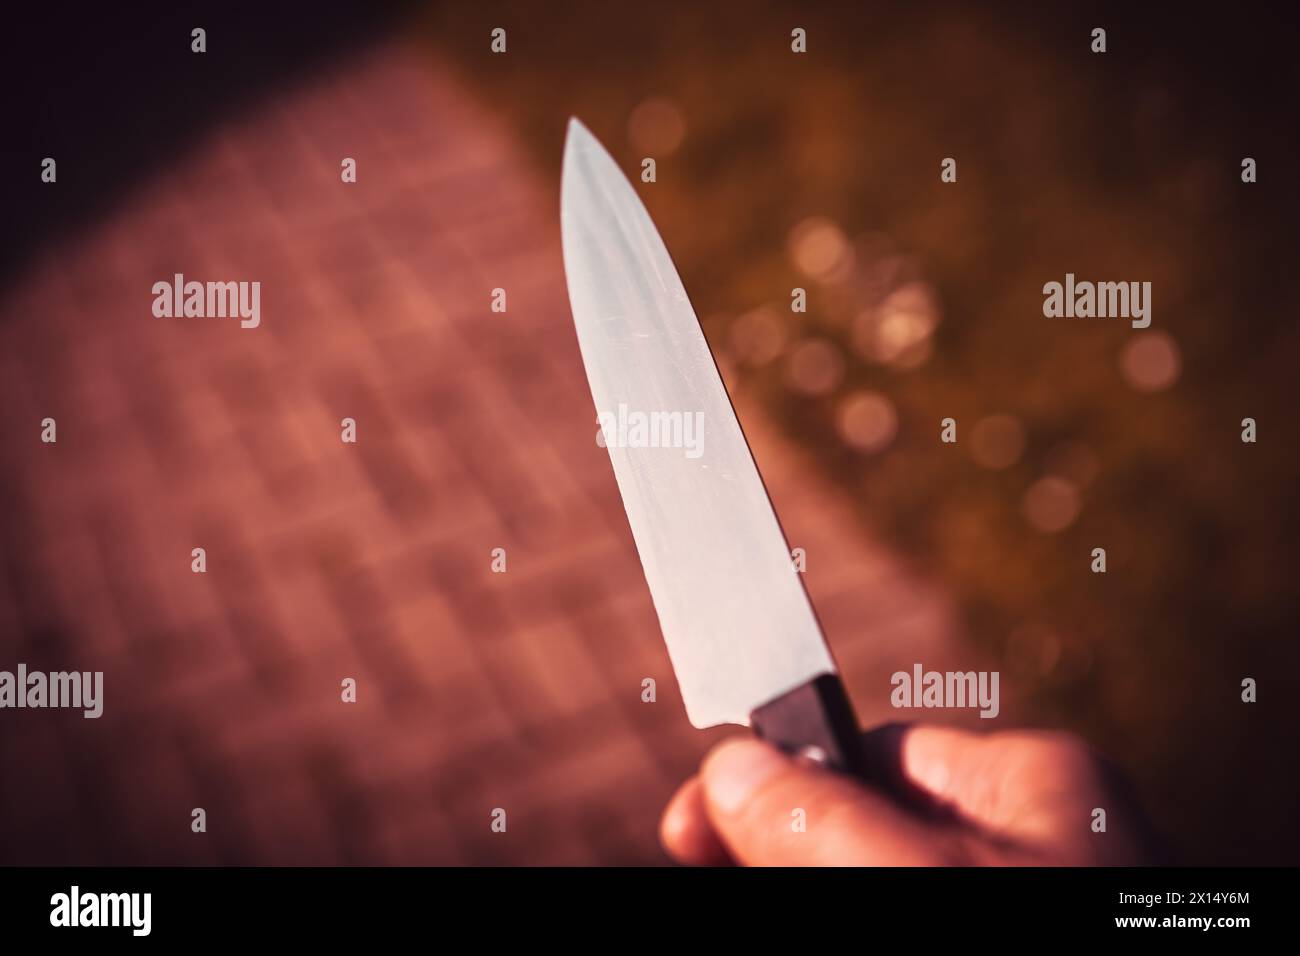 Male Hand With Knife, Symbolic Photo Crime Stock Photo